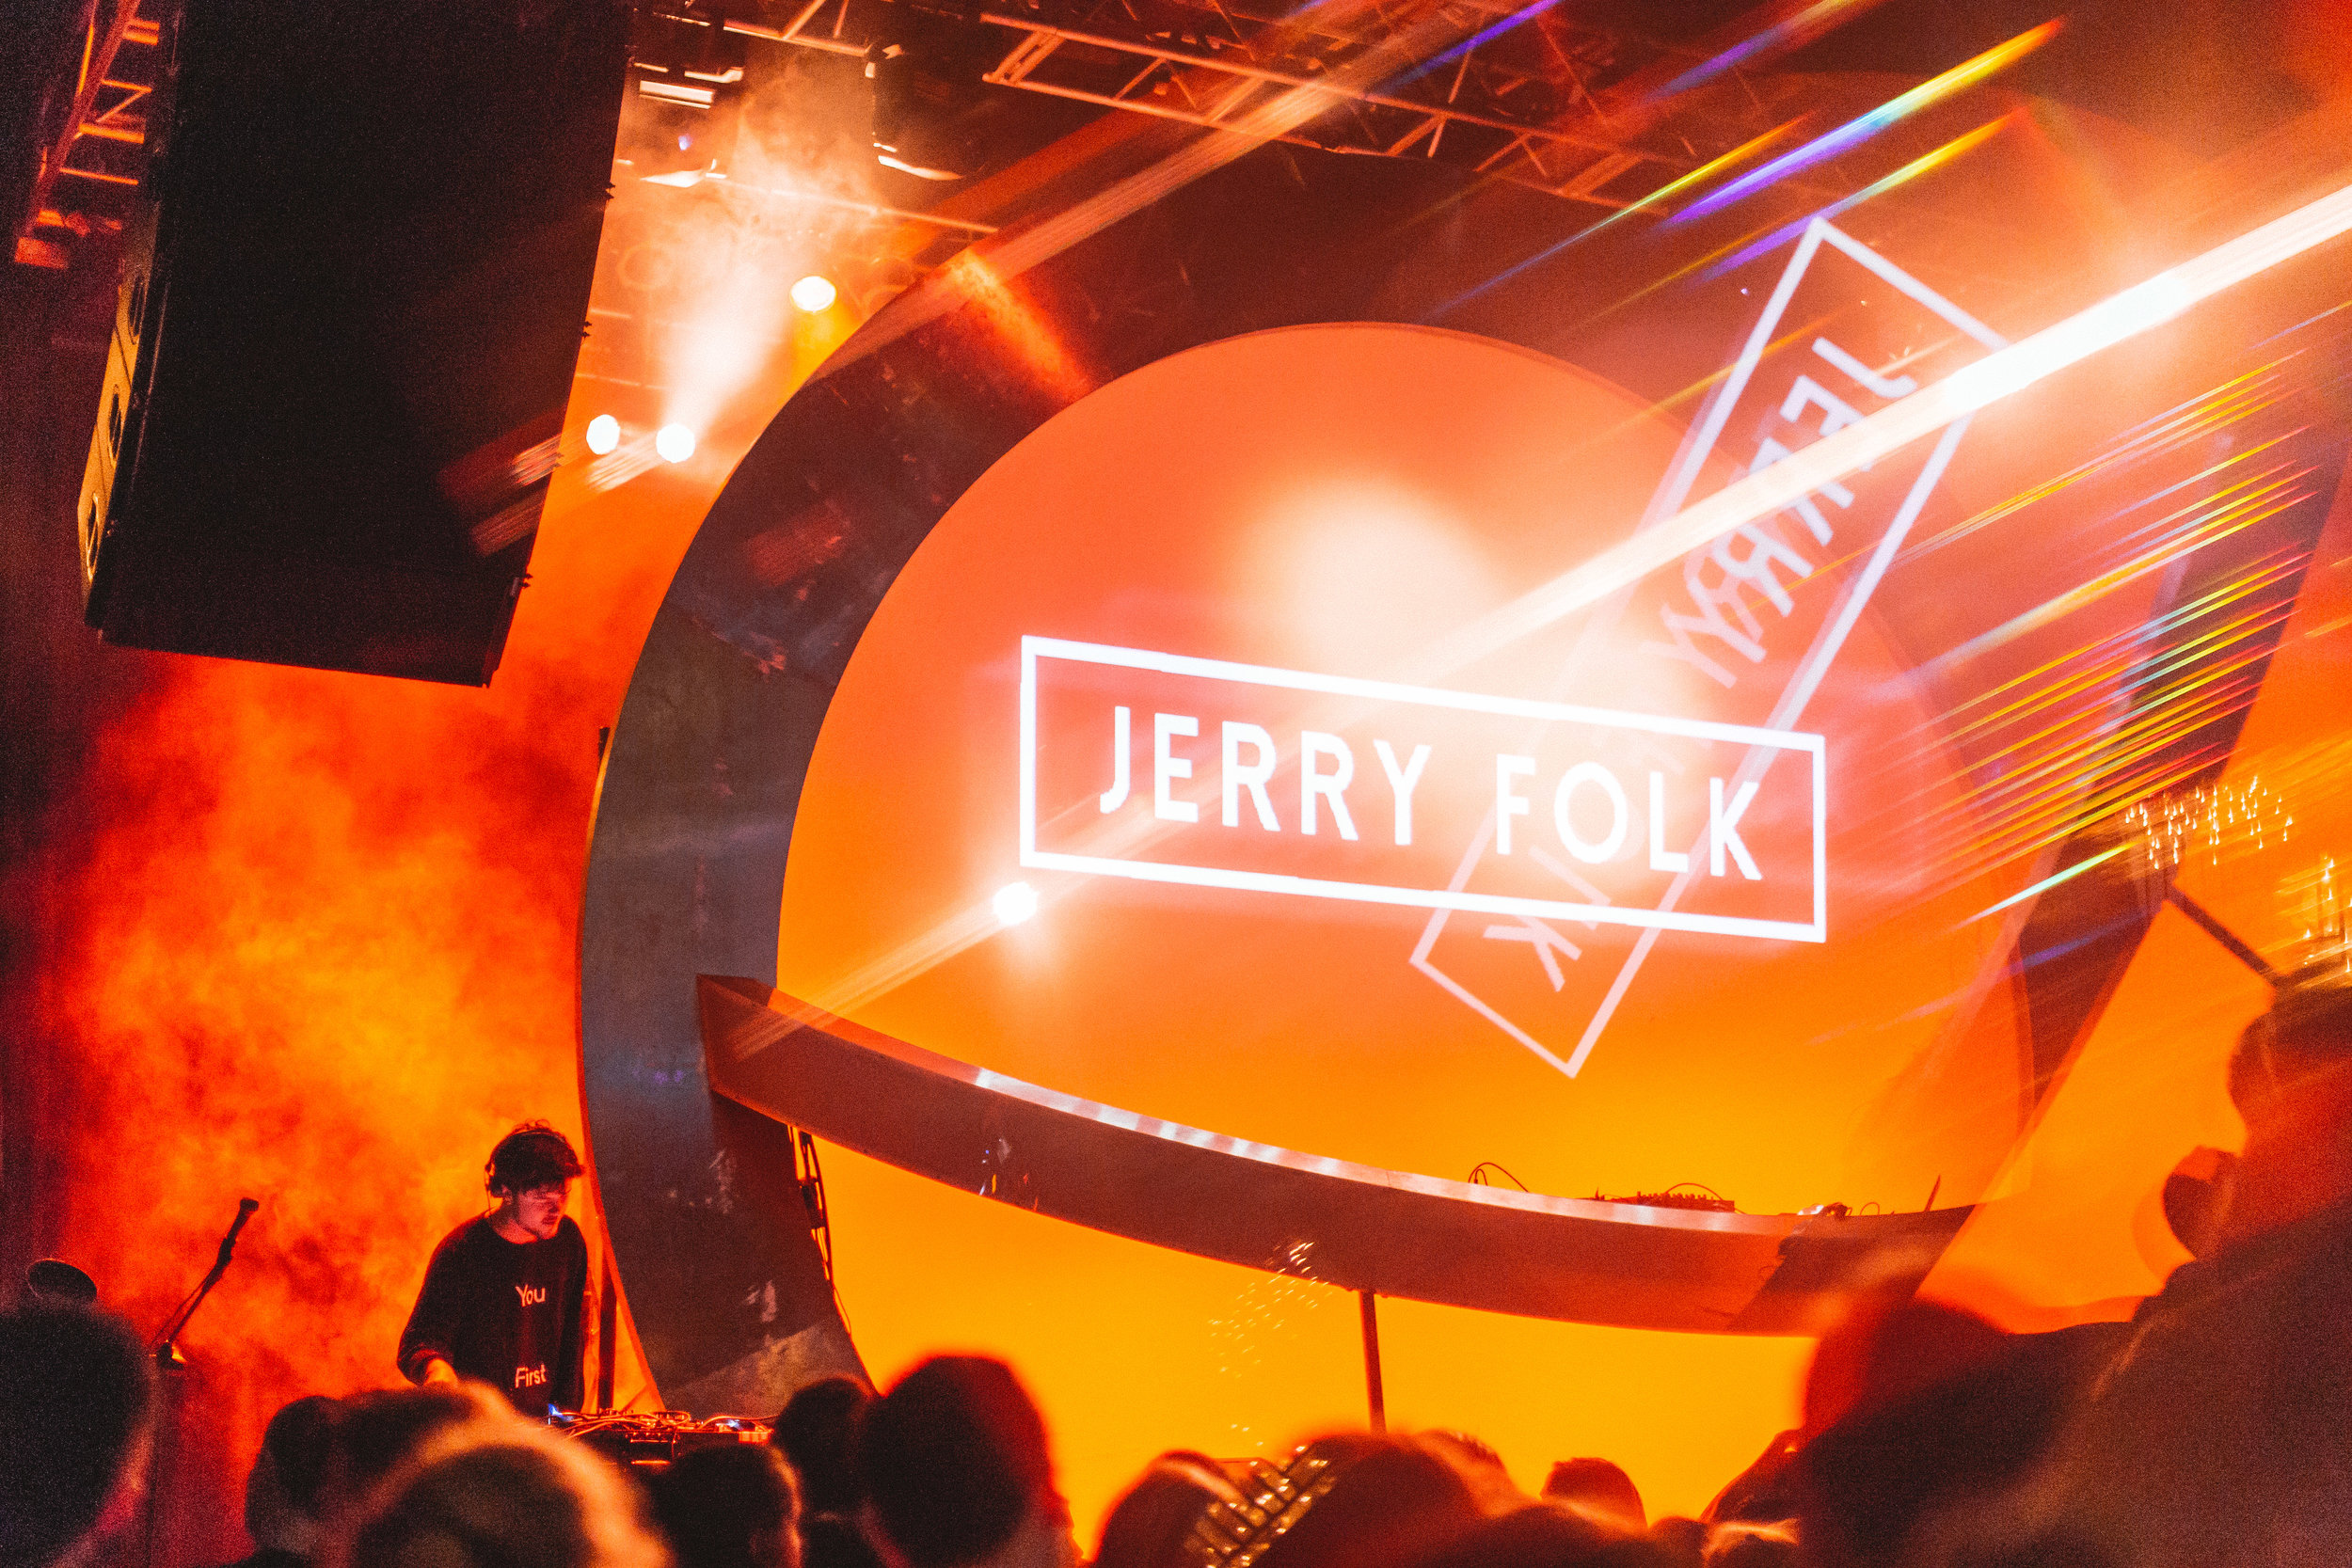 Jerry Folk @ 9-30 Club Preview-1.jpg